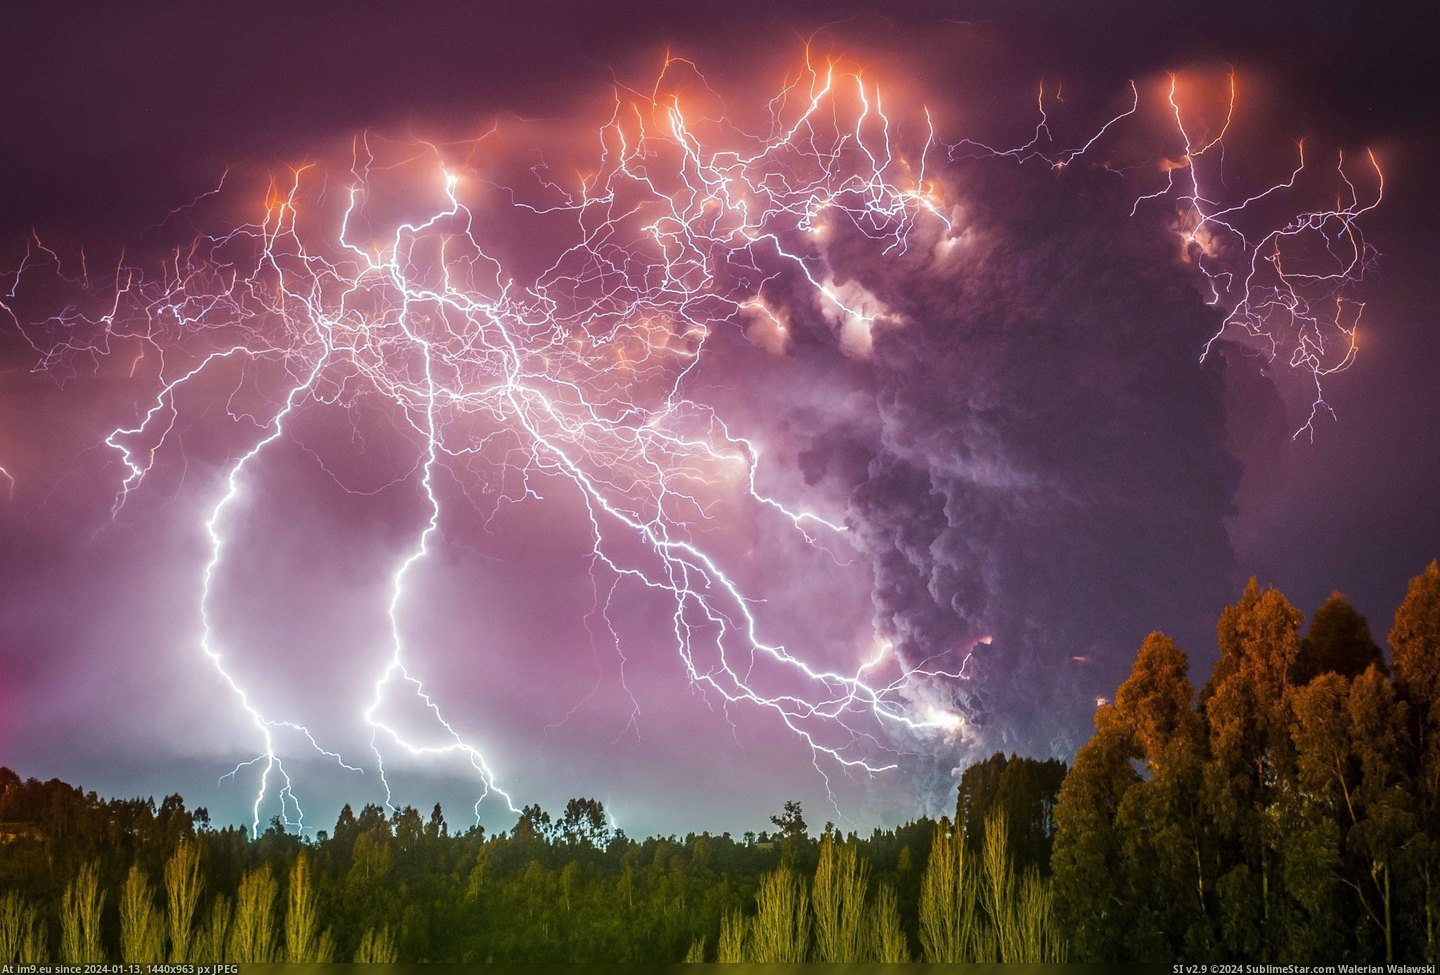 #Photo #Francisco #Lightning #Caulle #Negroni #Volcano #Chile #Cord [Earthporn] Lightning at Cordón Caulle volcano in Chile. Photo by Francisco Negroni. [3258x2190] Pic. (Bild von album My r/EARTHPORN favs))